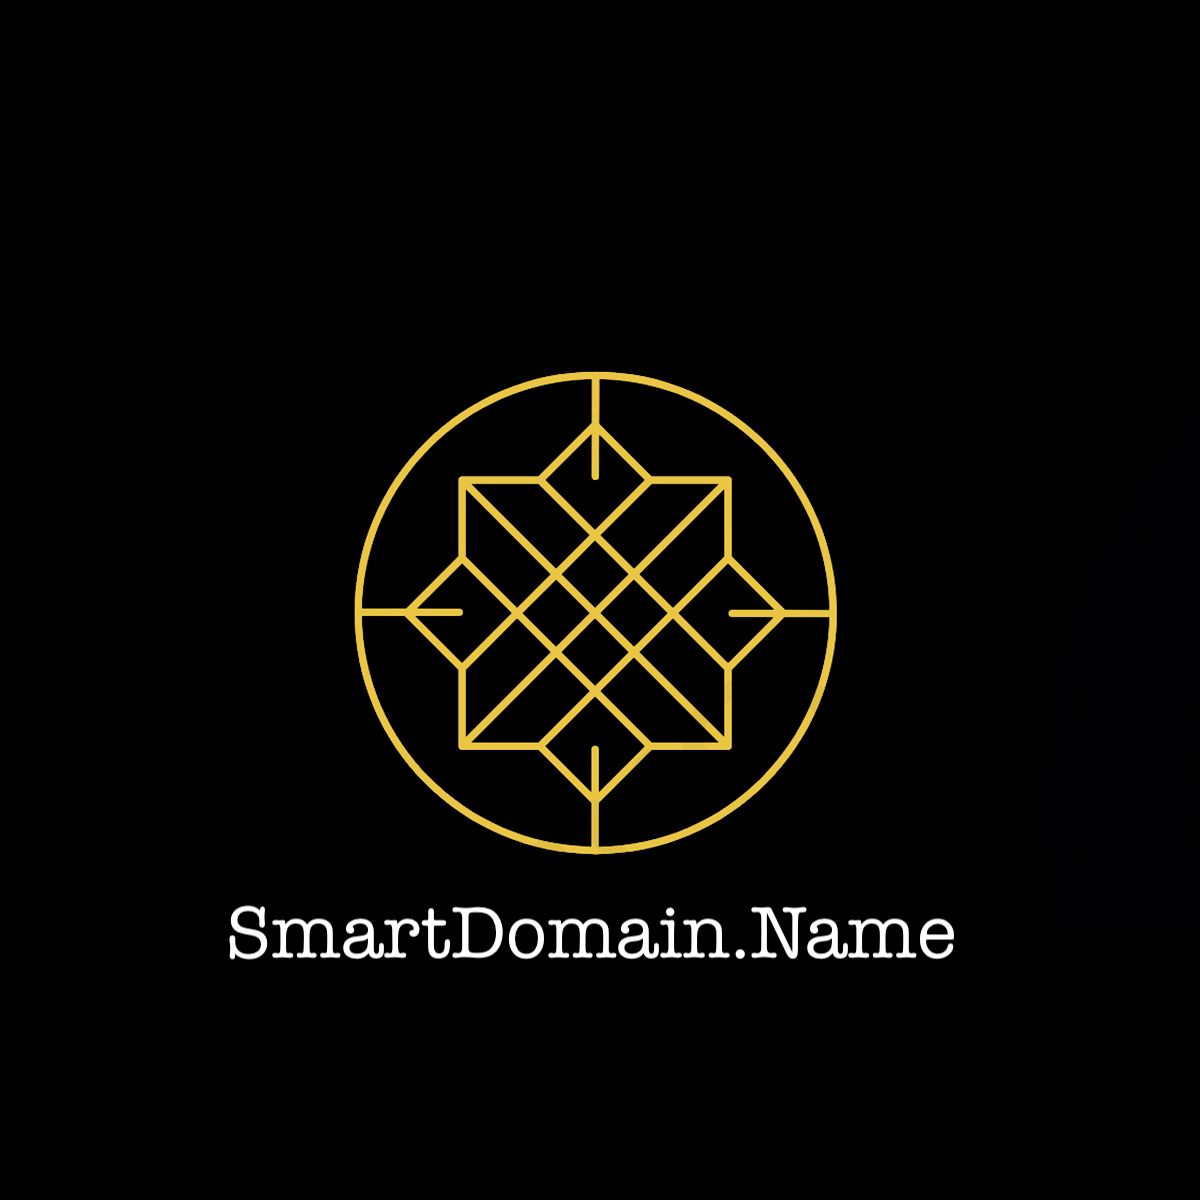 SmartDomain.Name Logo